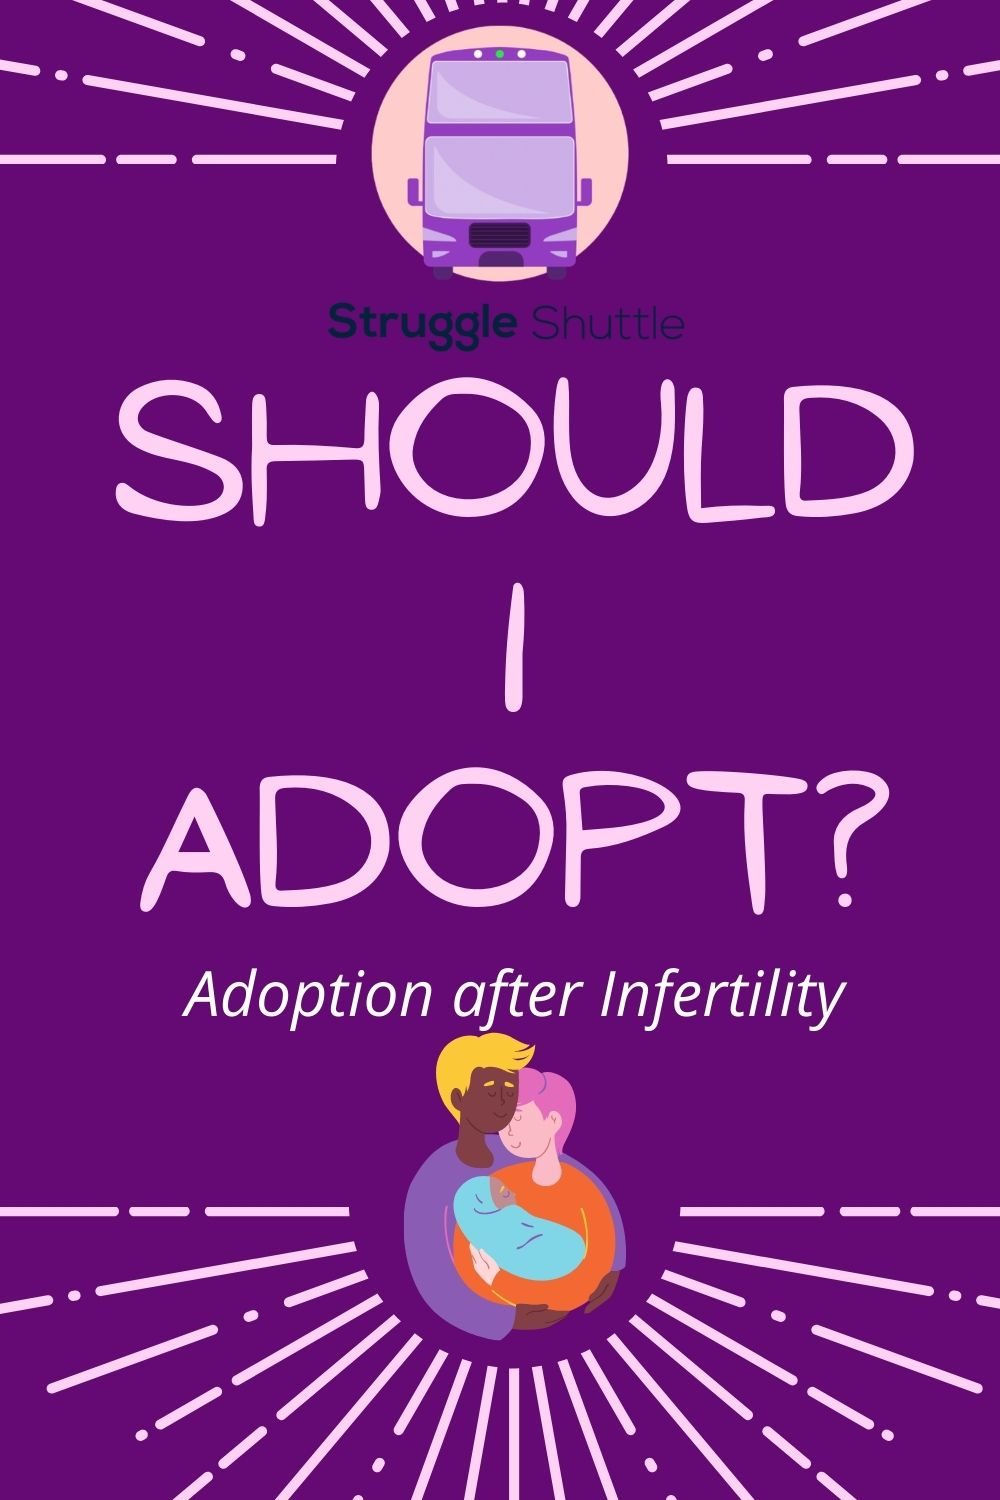 adoption after infertility